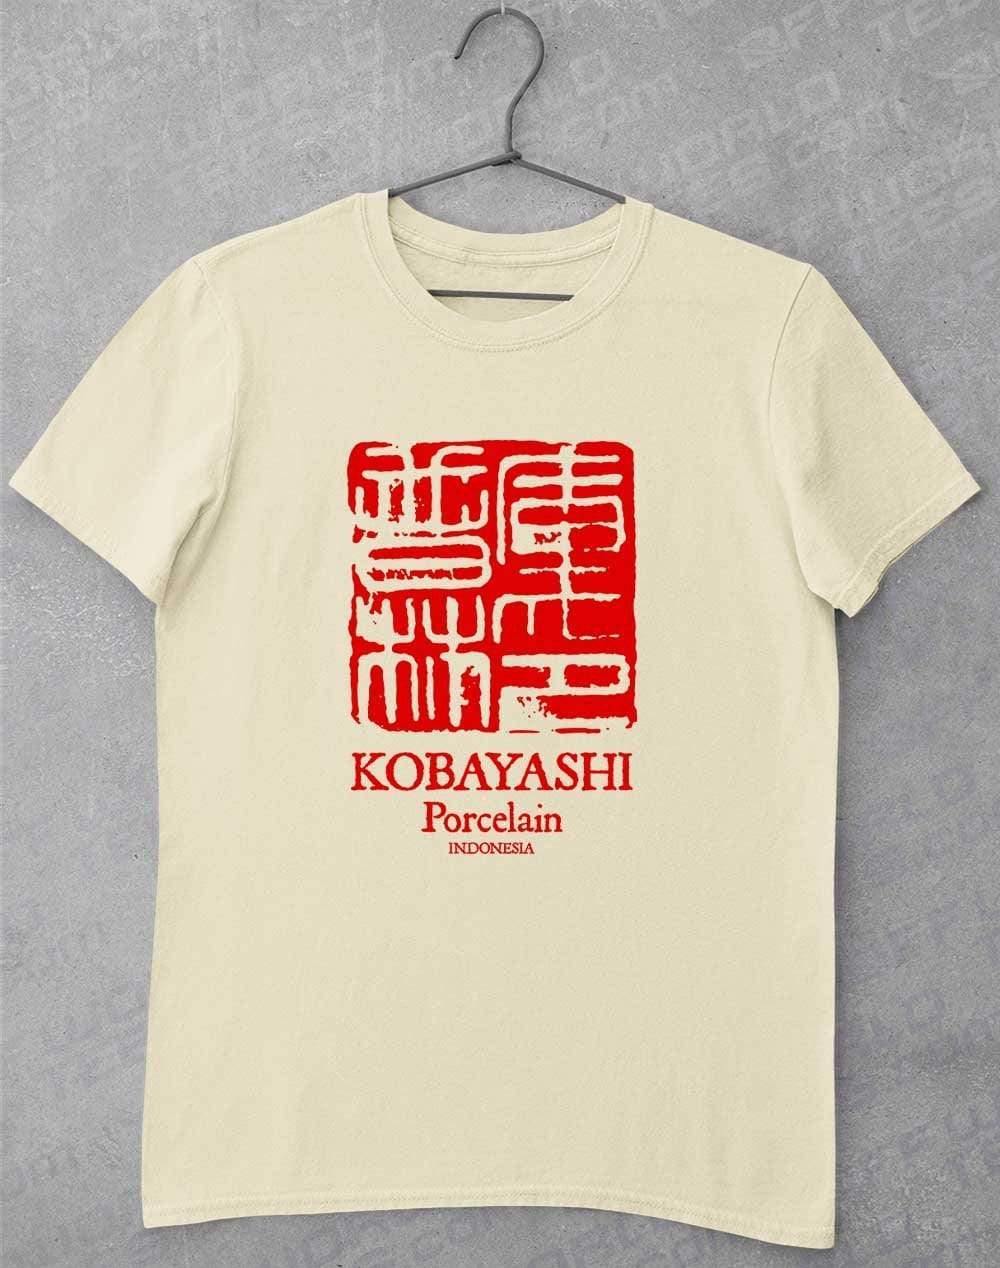 Kobayashi Porcelain T-Shirt S / Natural  - Off World Tees